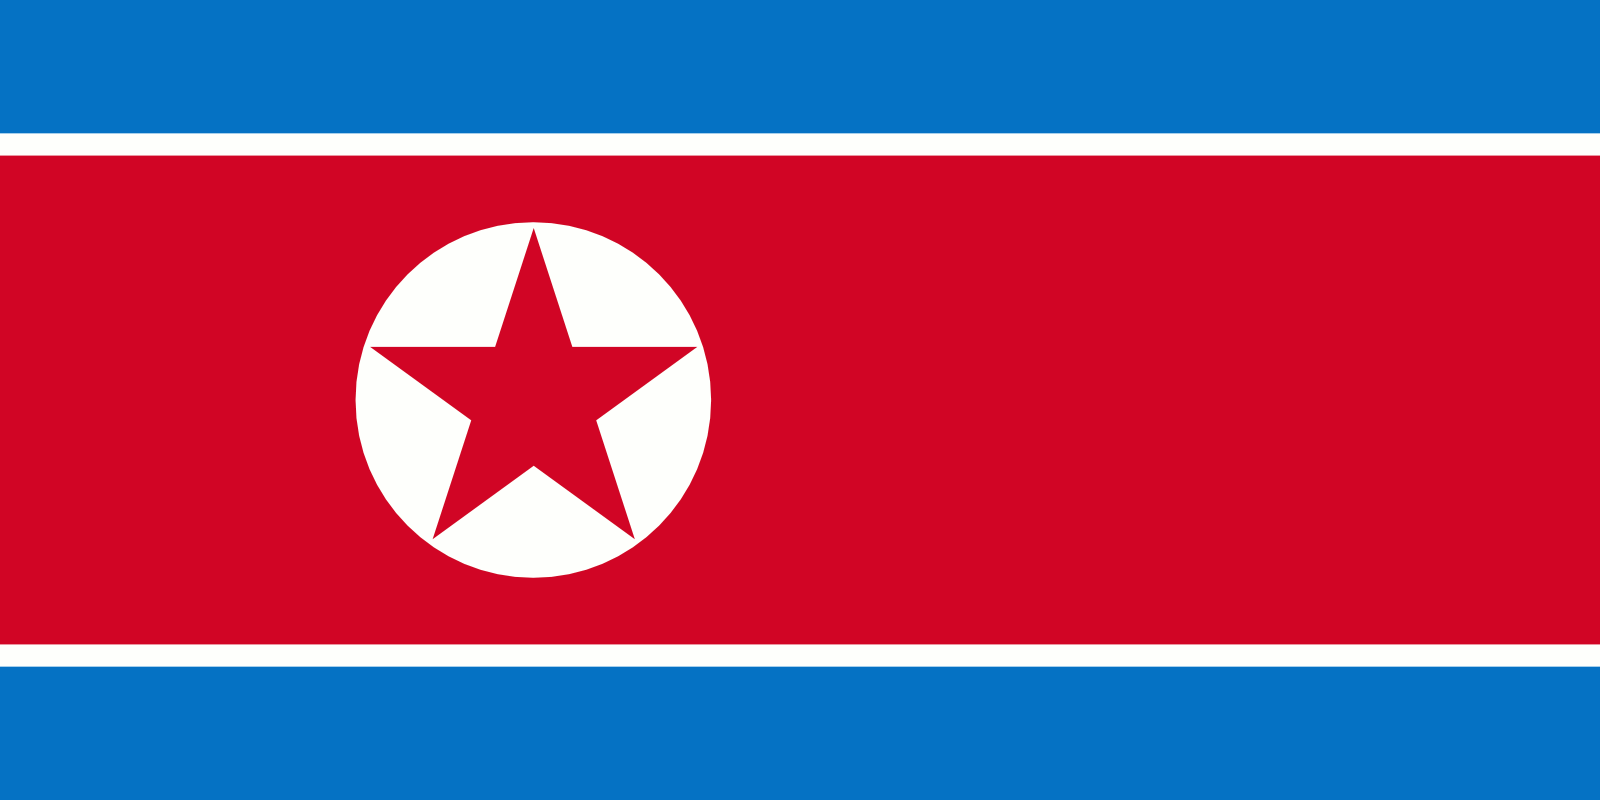 Flaga Korea Północna